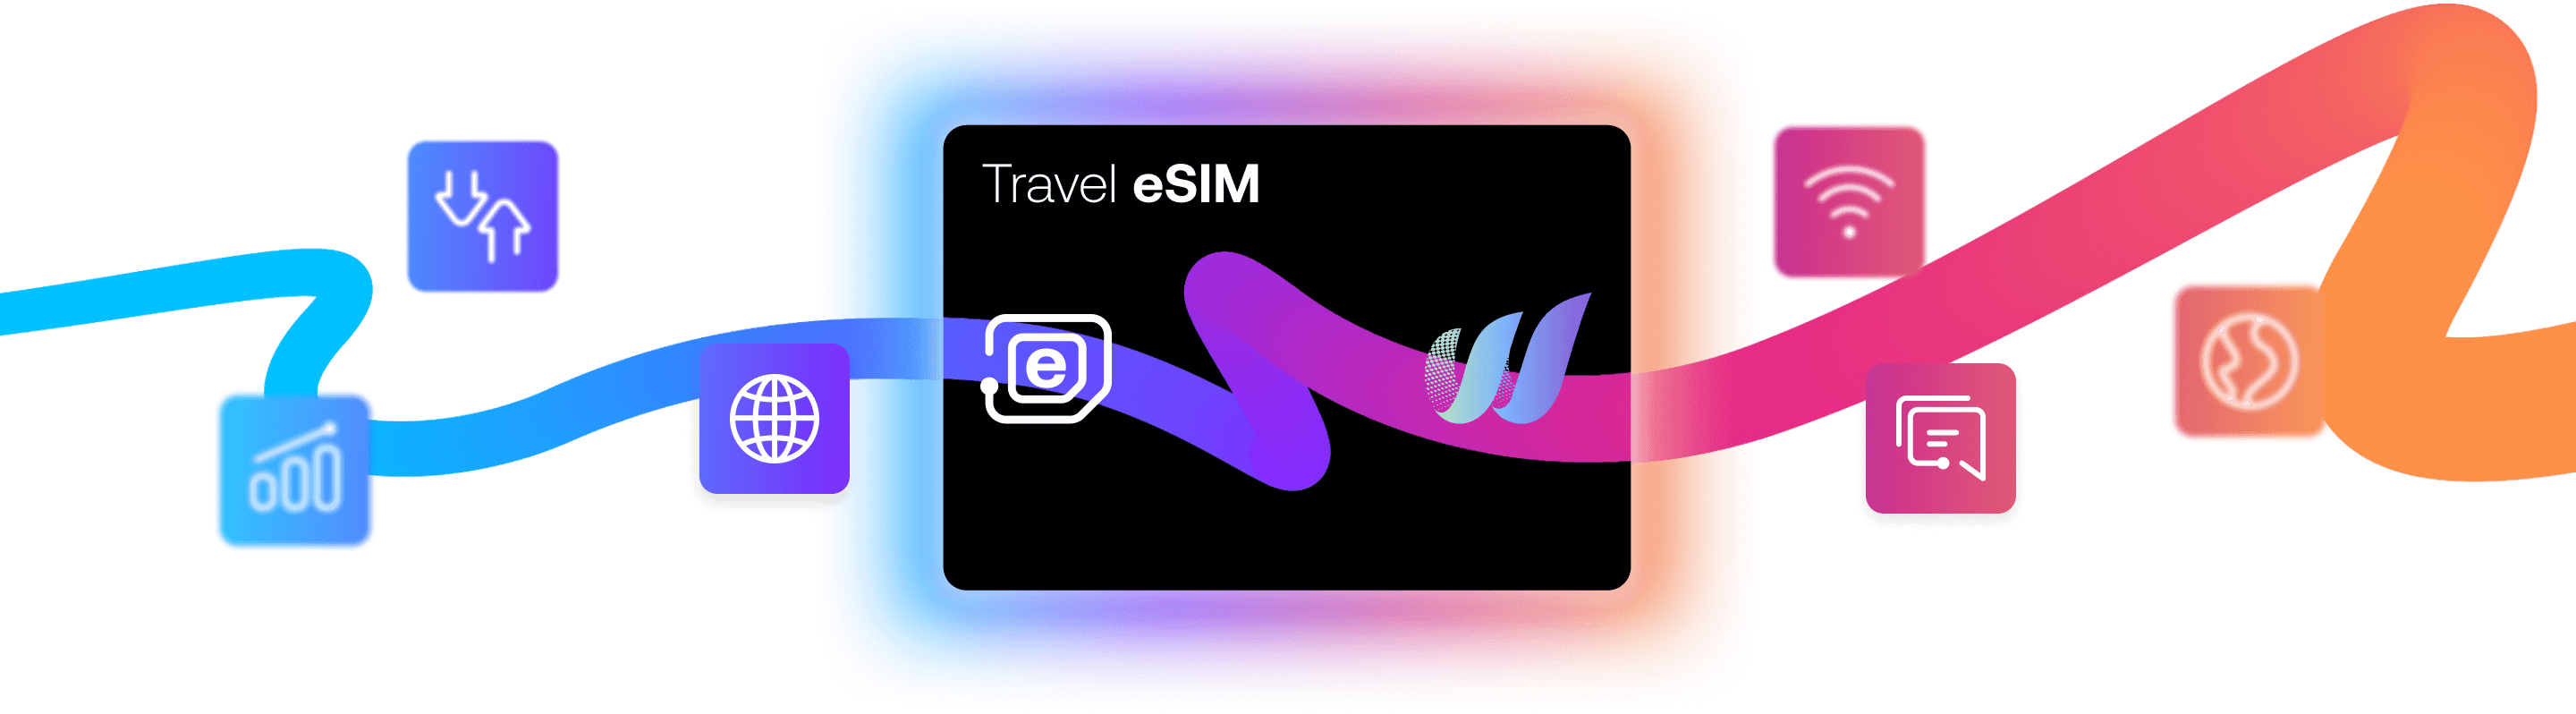 World Mobile Travel eSIM